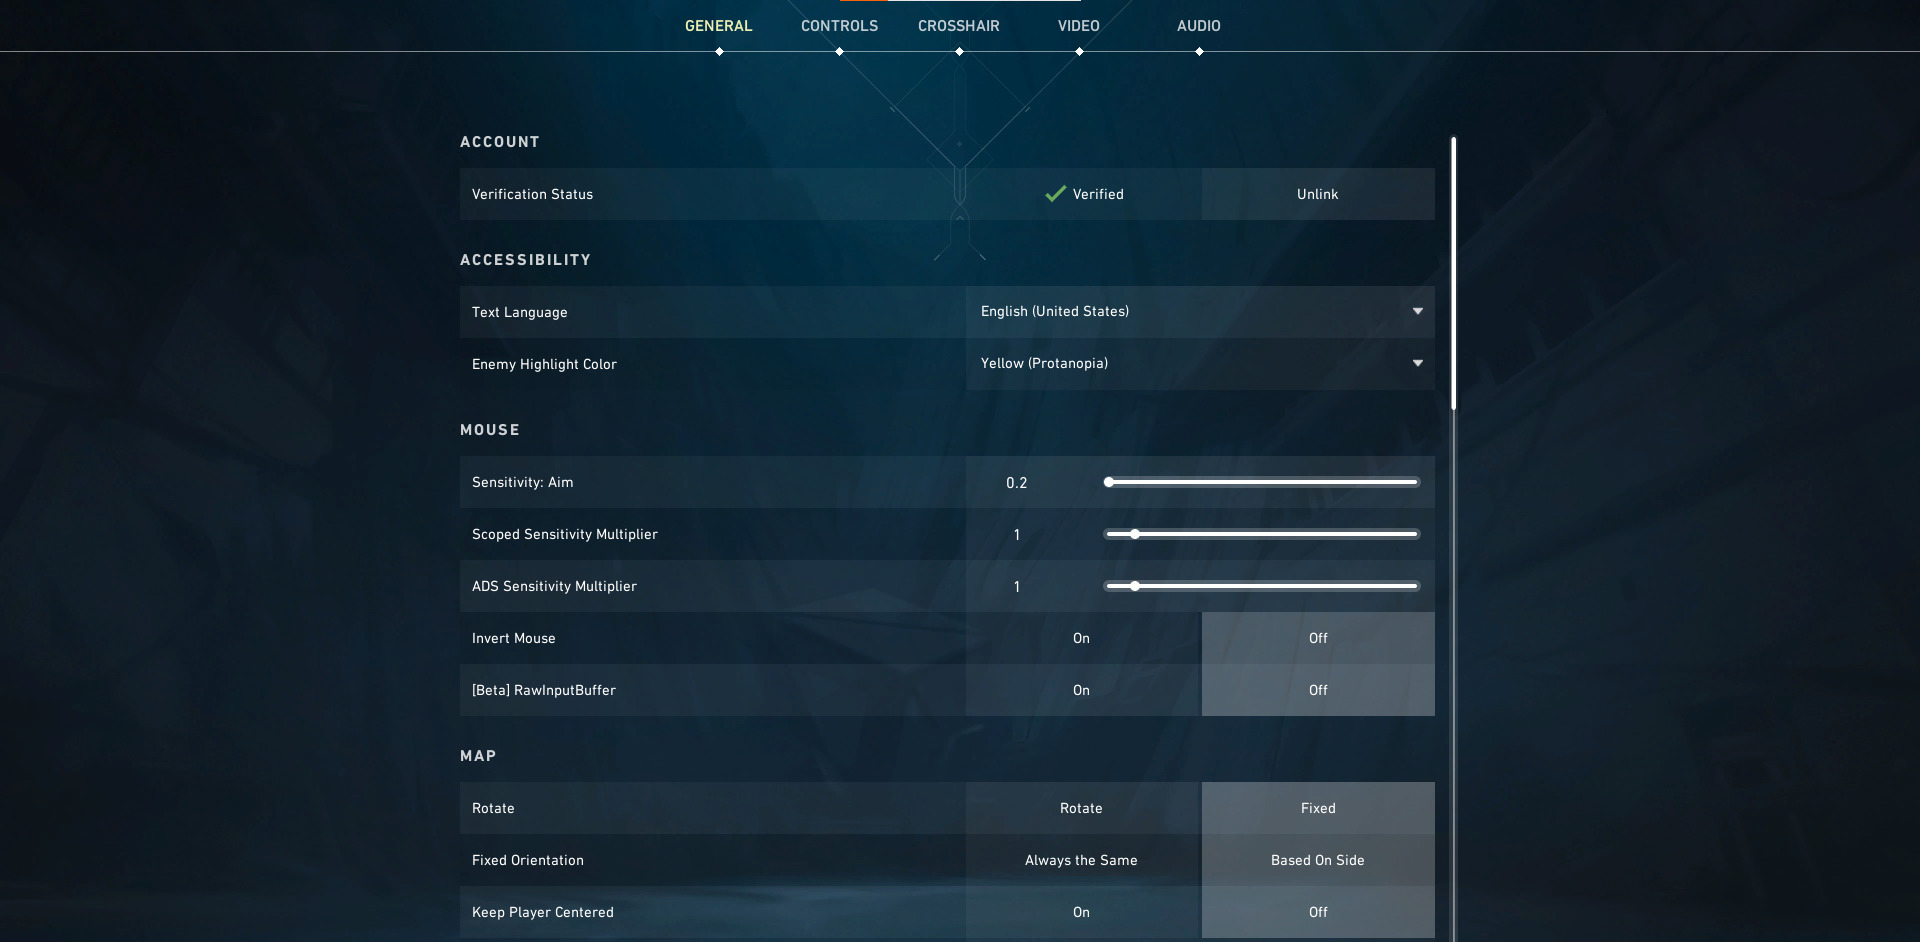 A screenshot showing the Settings menu in Valorant